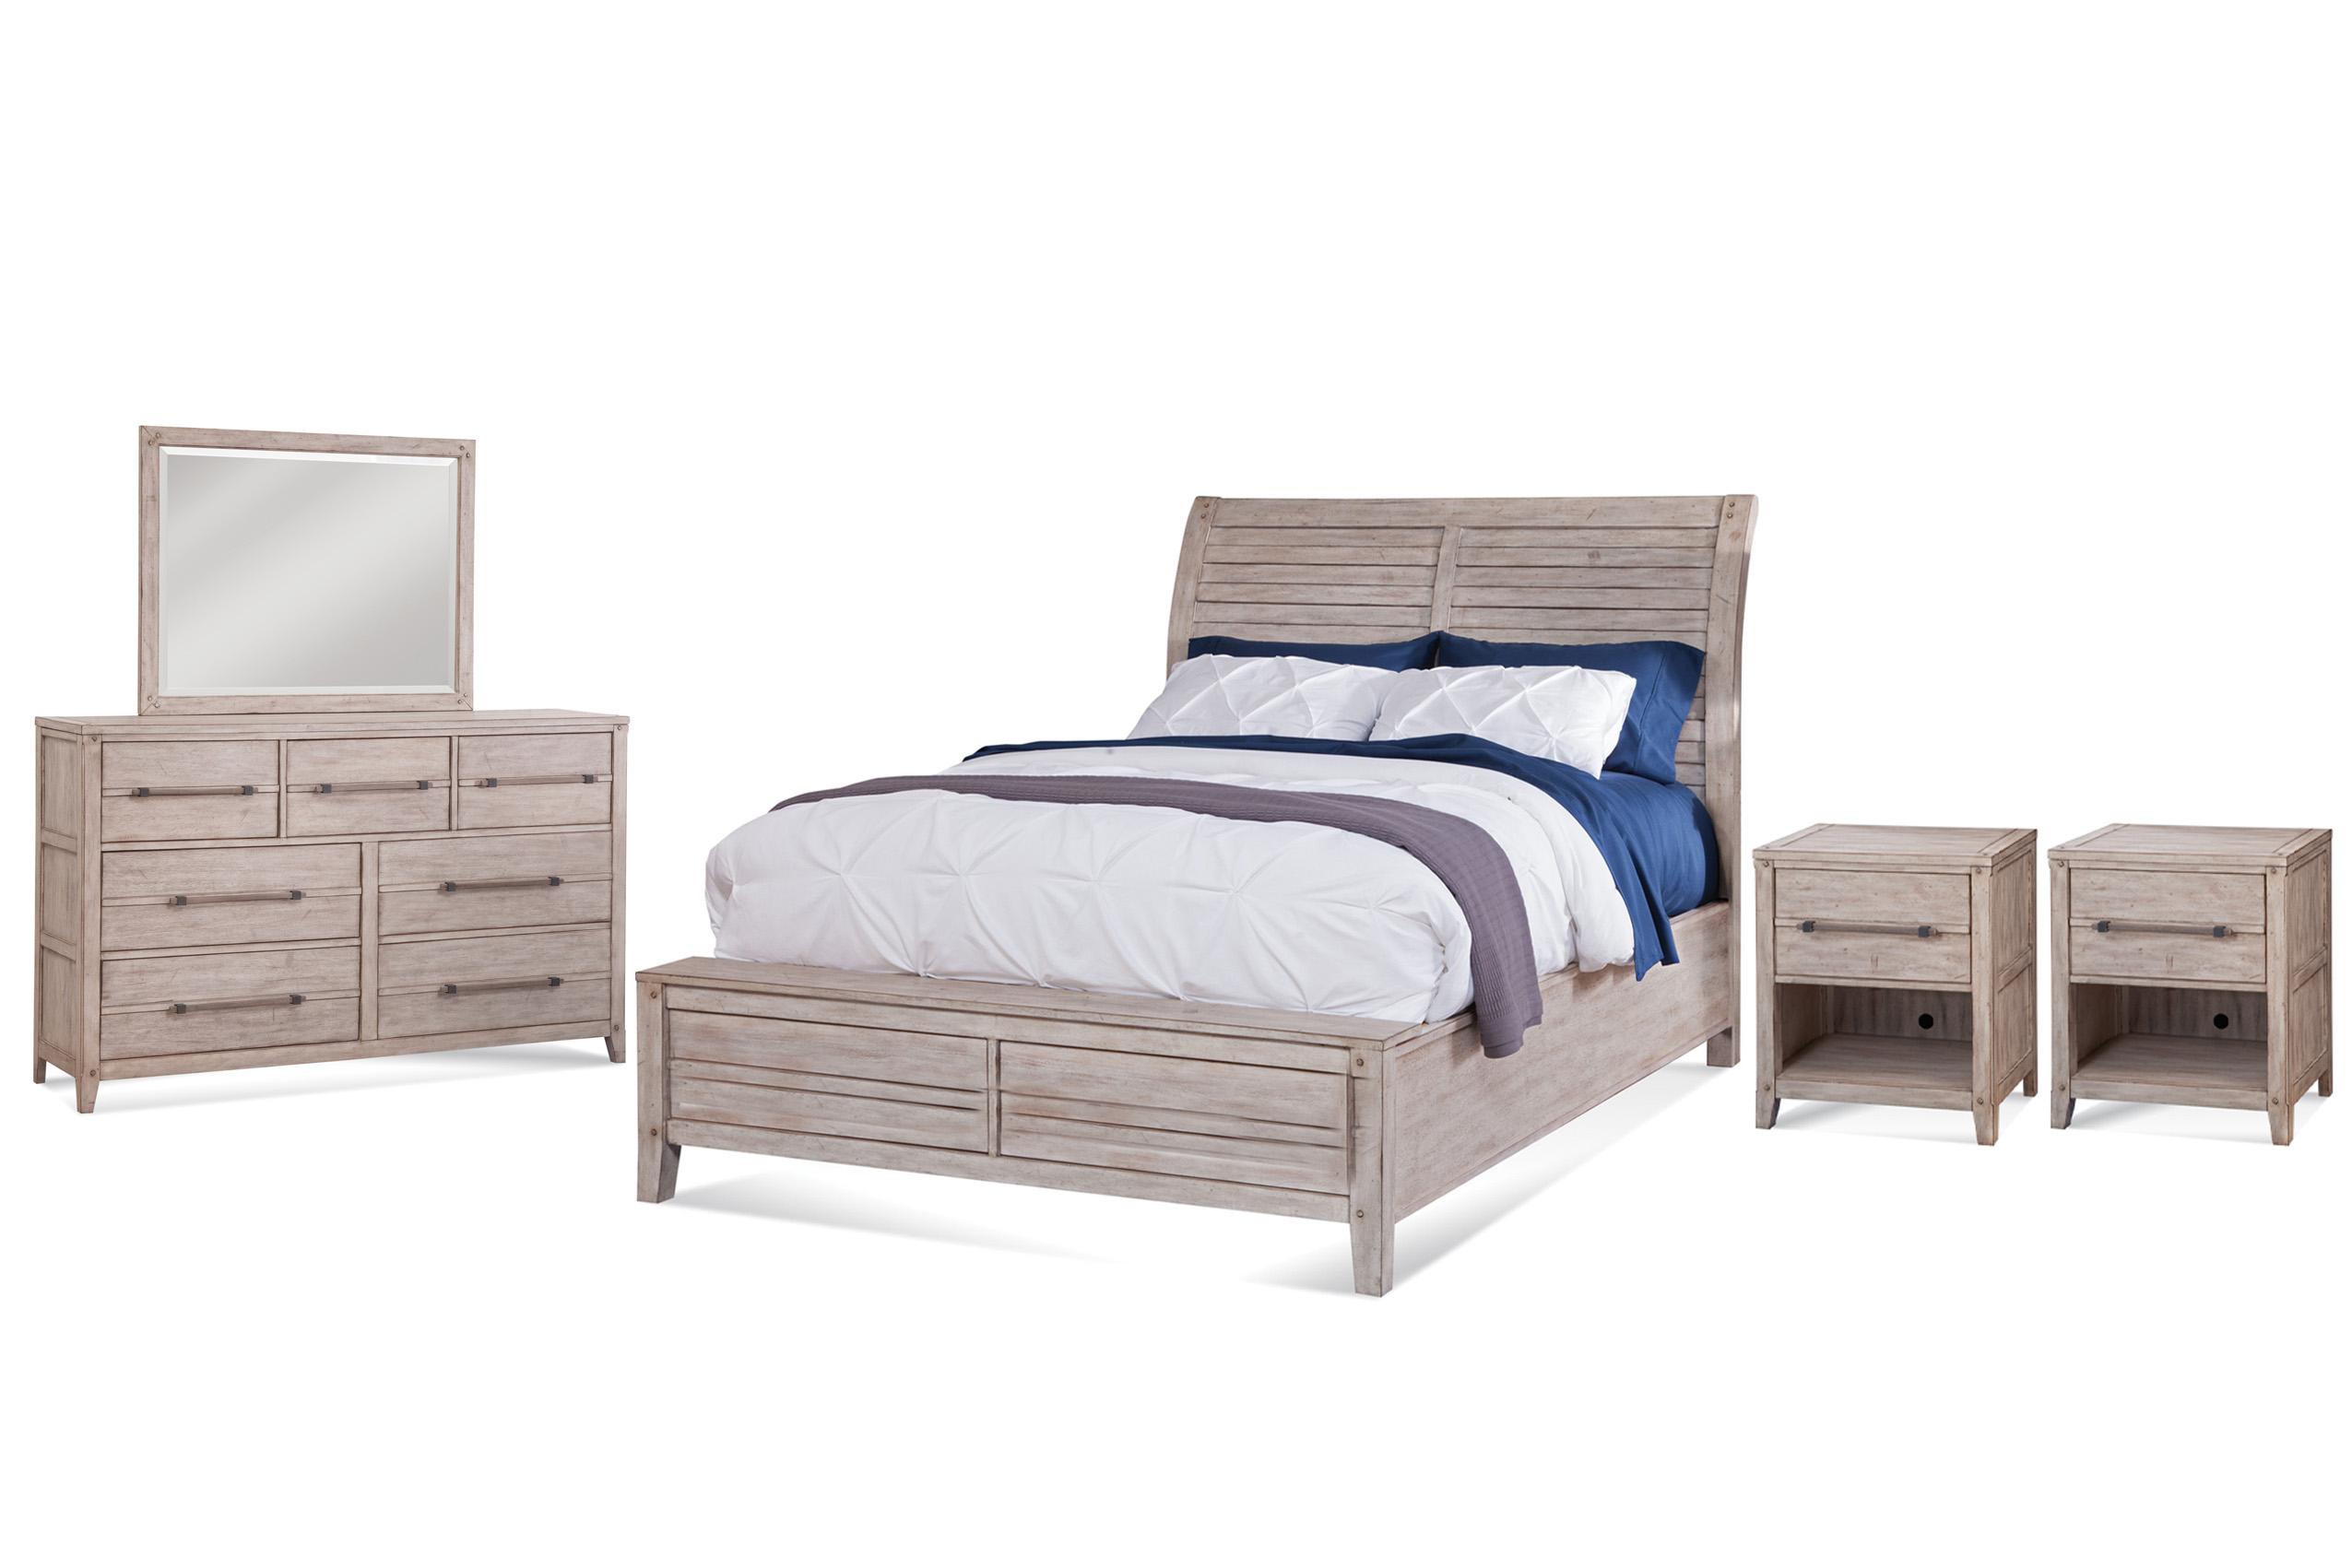 Classic, Traditional Sleigh Bedroom Set AURORA 2810-50SLP 2810-50SLPN-2NDM-5PC in whitewash 